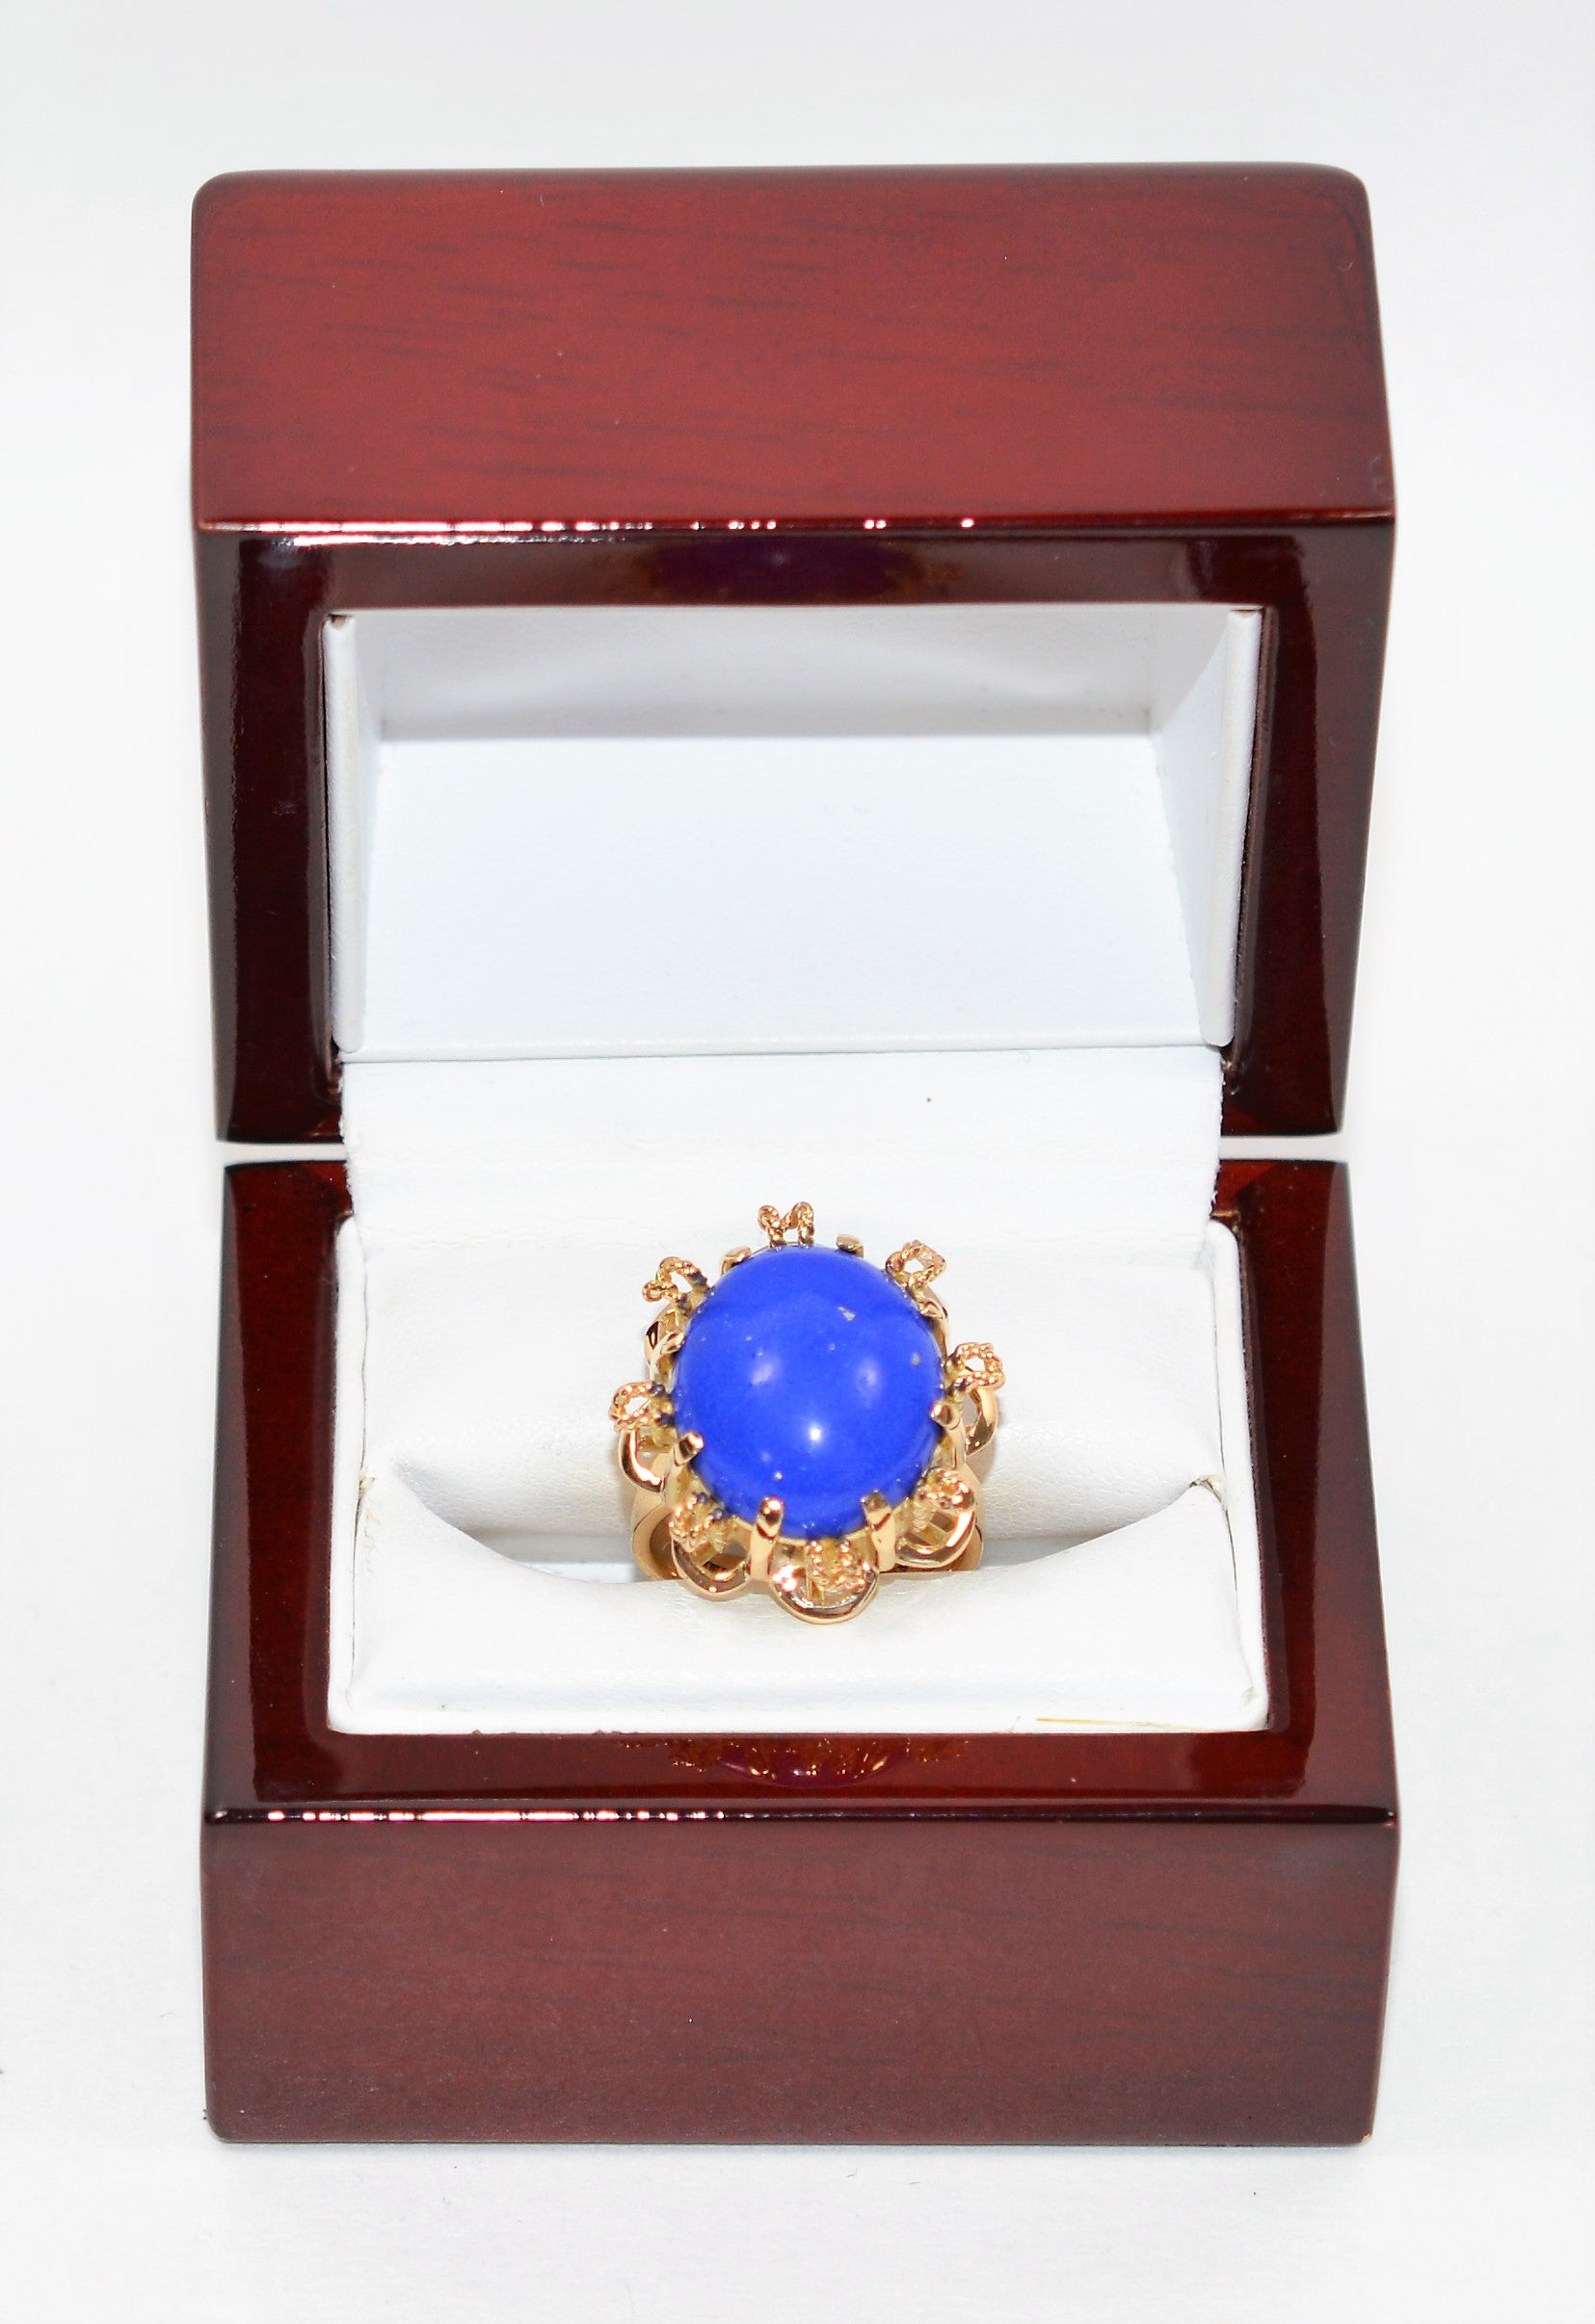 Natural Lapis Lazuli Ring 14K Solid Gold Gemstone Ring Blue Ring Birthstone Ring Estate Ring Statement Ring Cocktail Ring Fine Vintage Ring